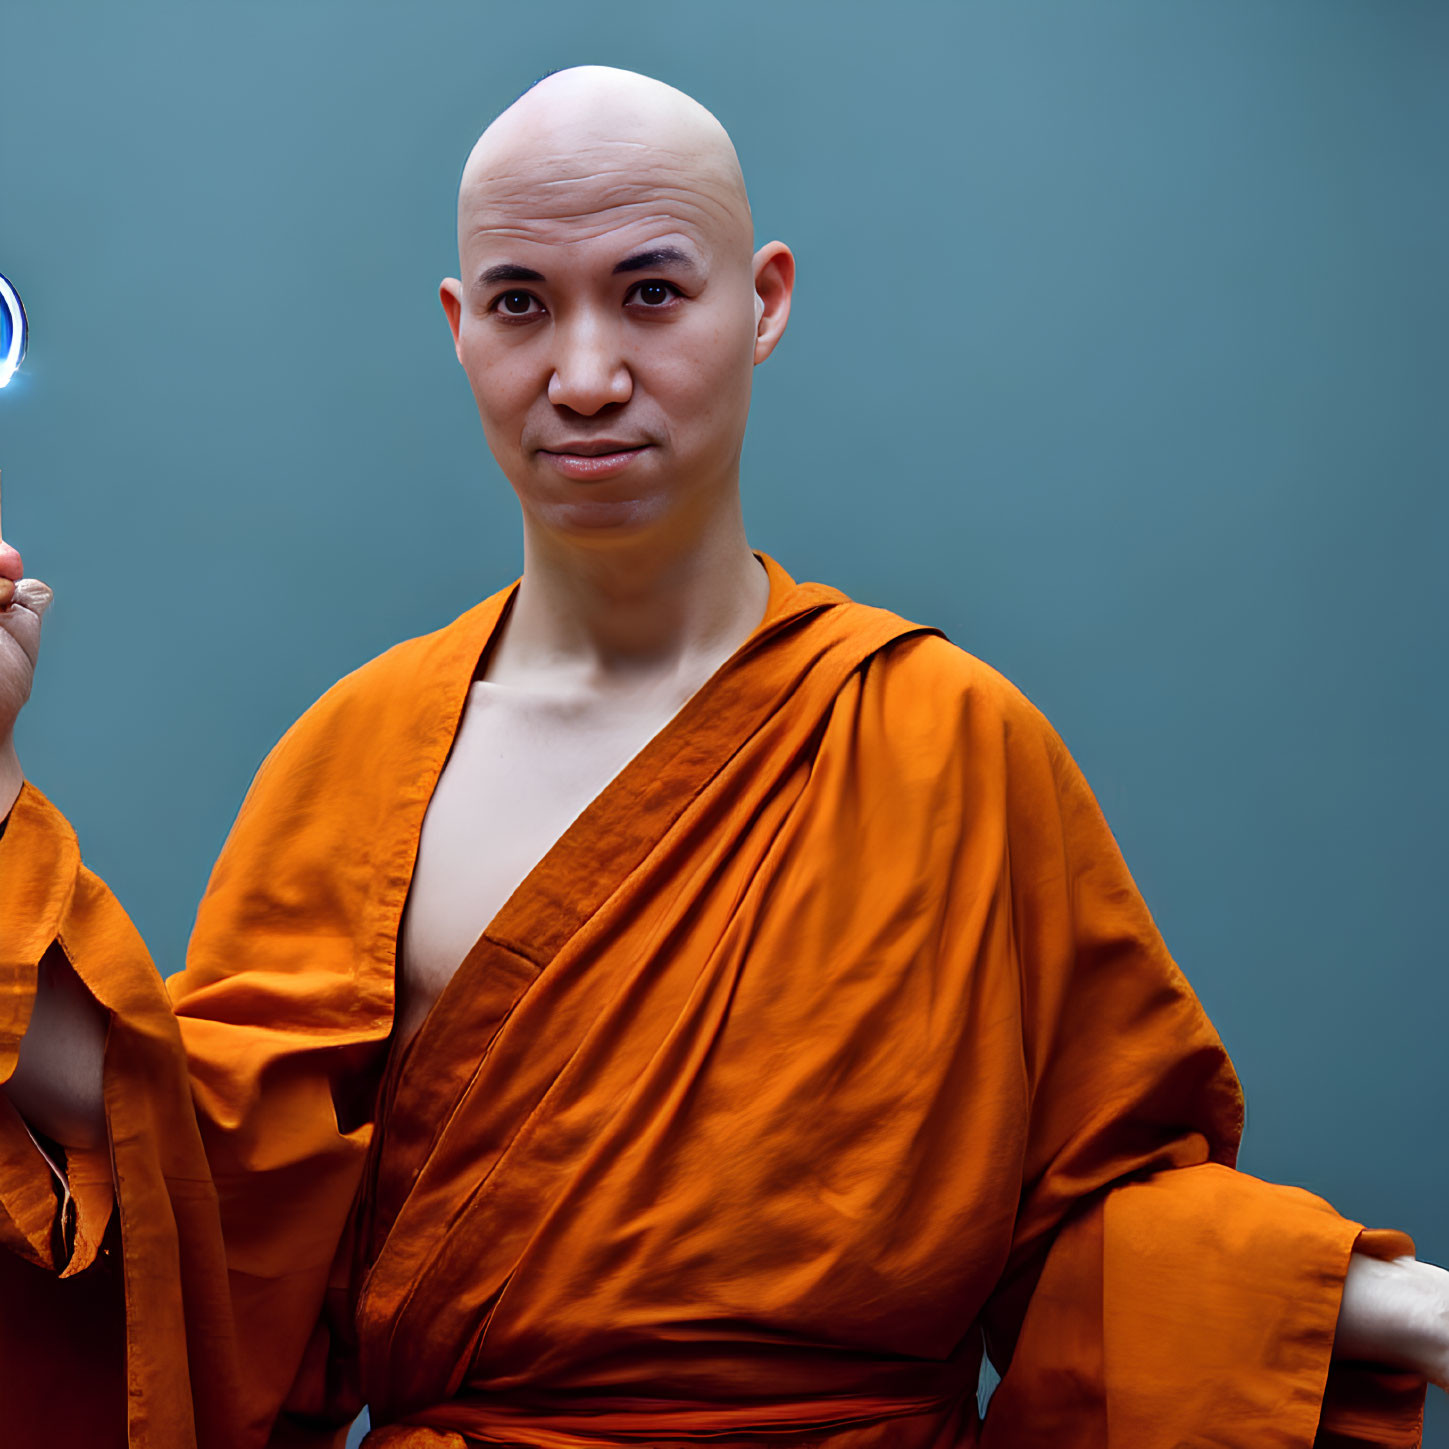 Buddhist monk in orange robe against teal background